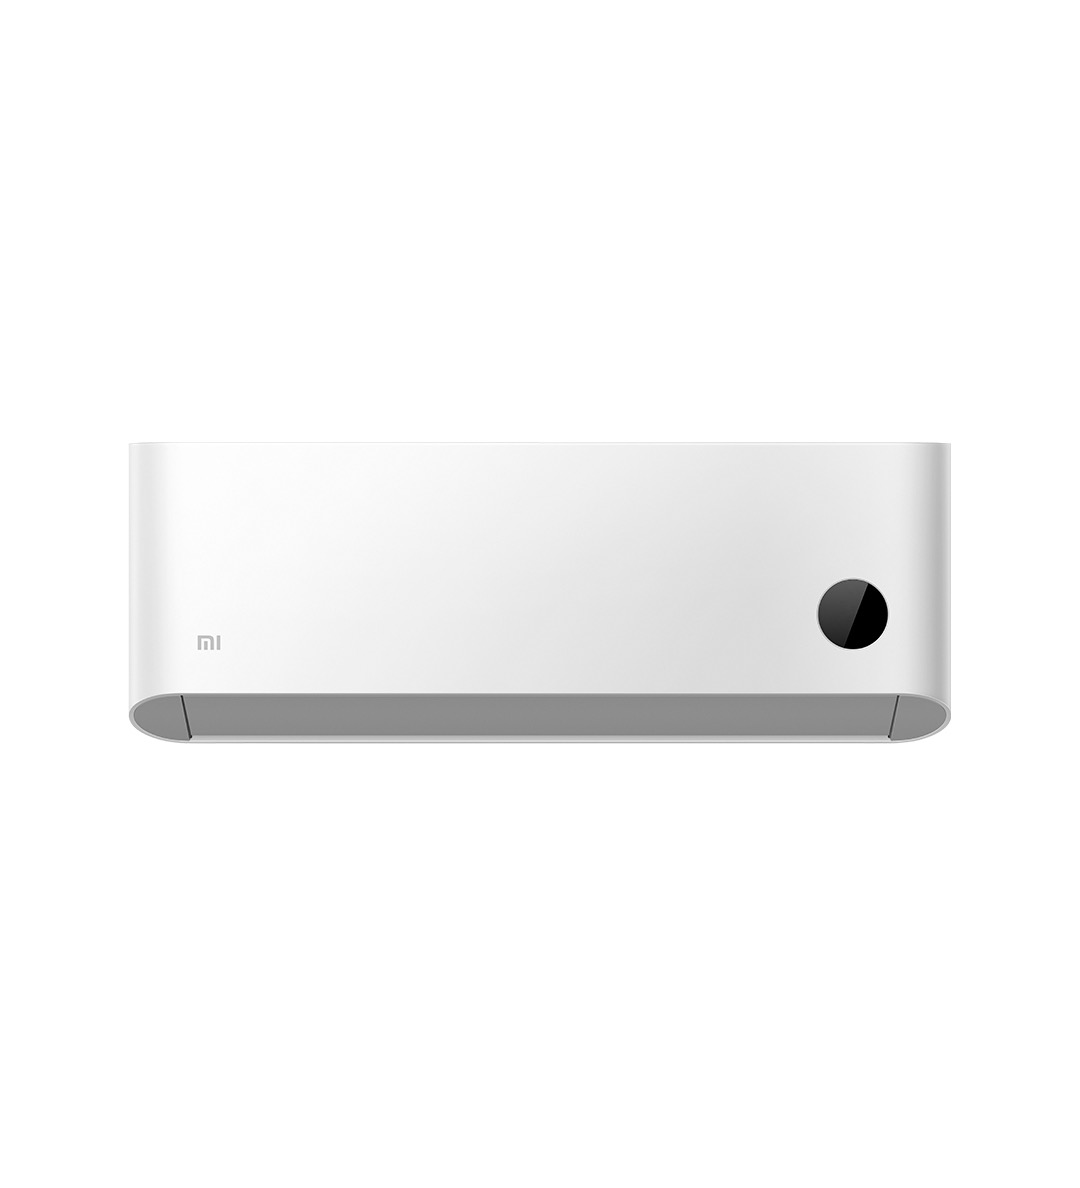 Сплит-система Mijia KFR-35GWN1A1 кондиционер xiaomi mijia smart air conditioner new level kfr 35gw n1a1